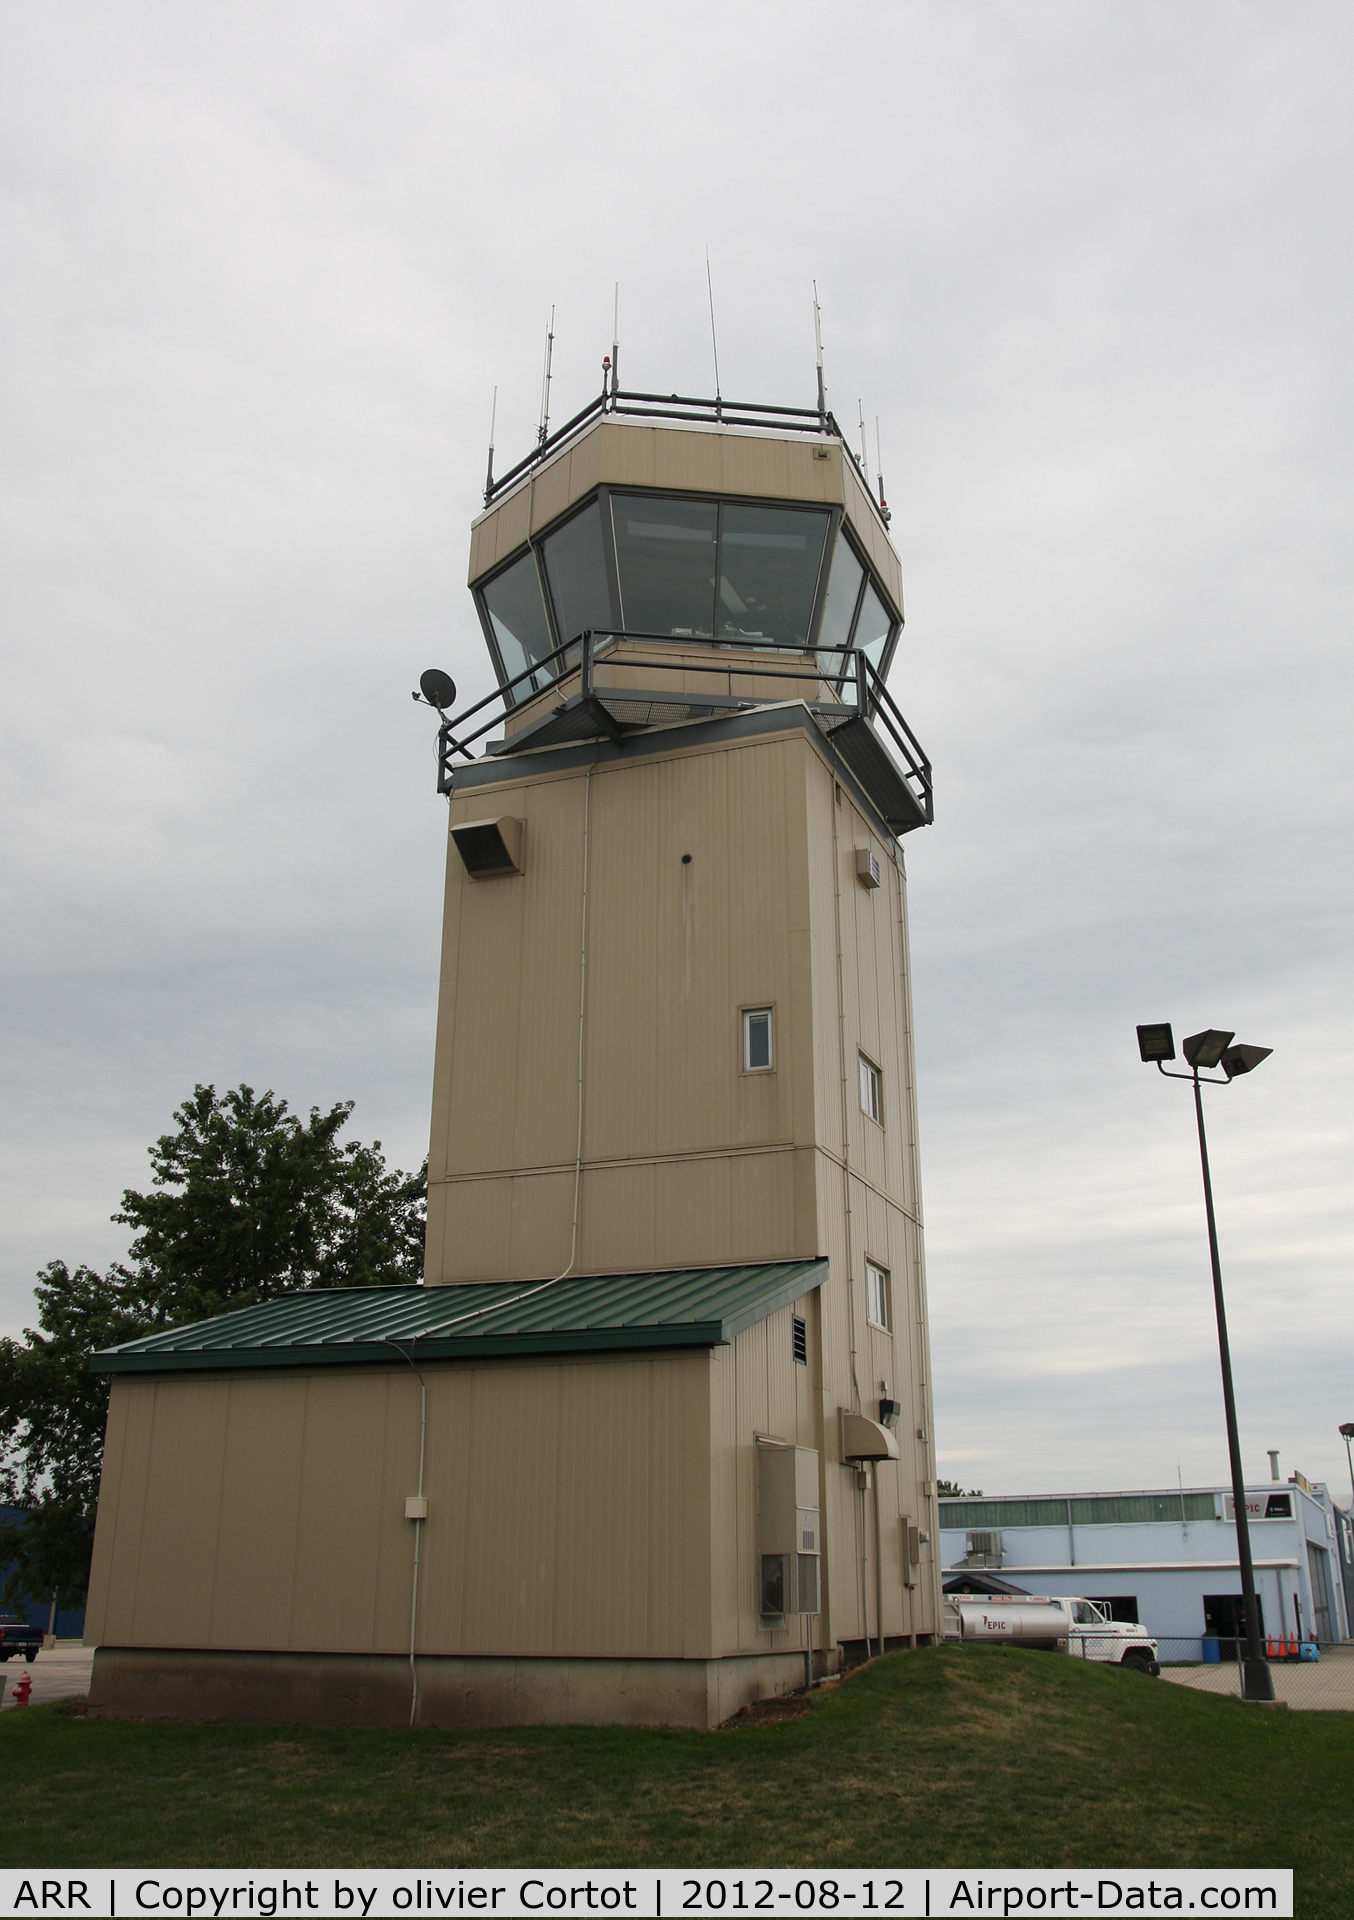 Aurora Municipal Airport (ARR) - the control tower